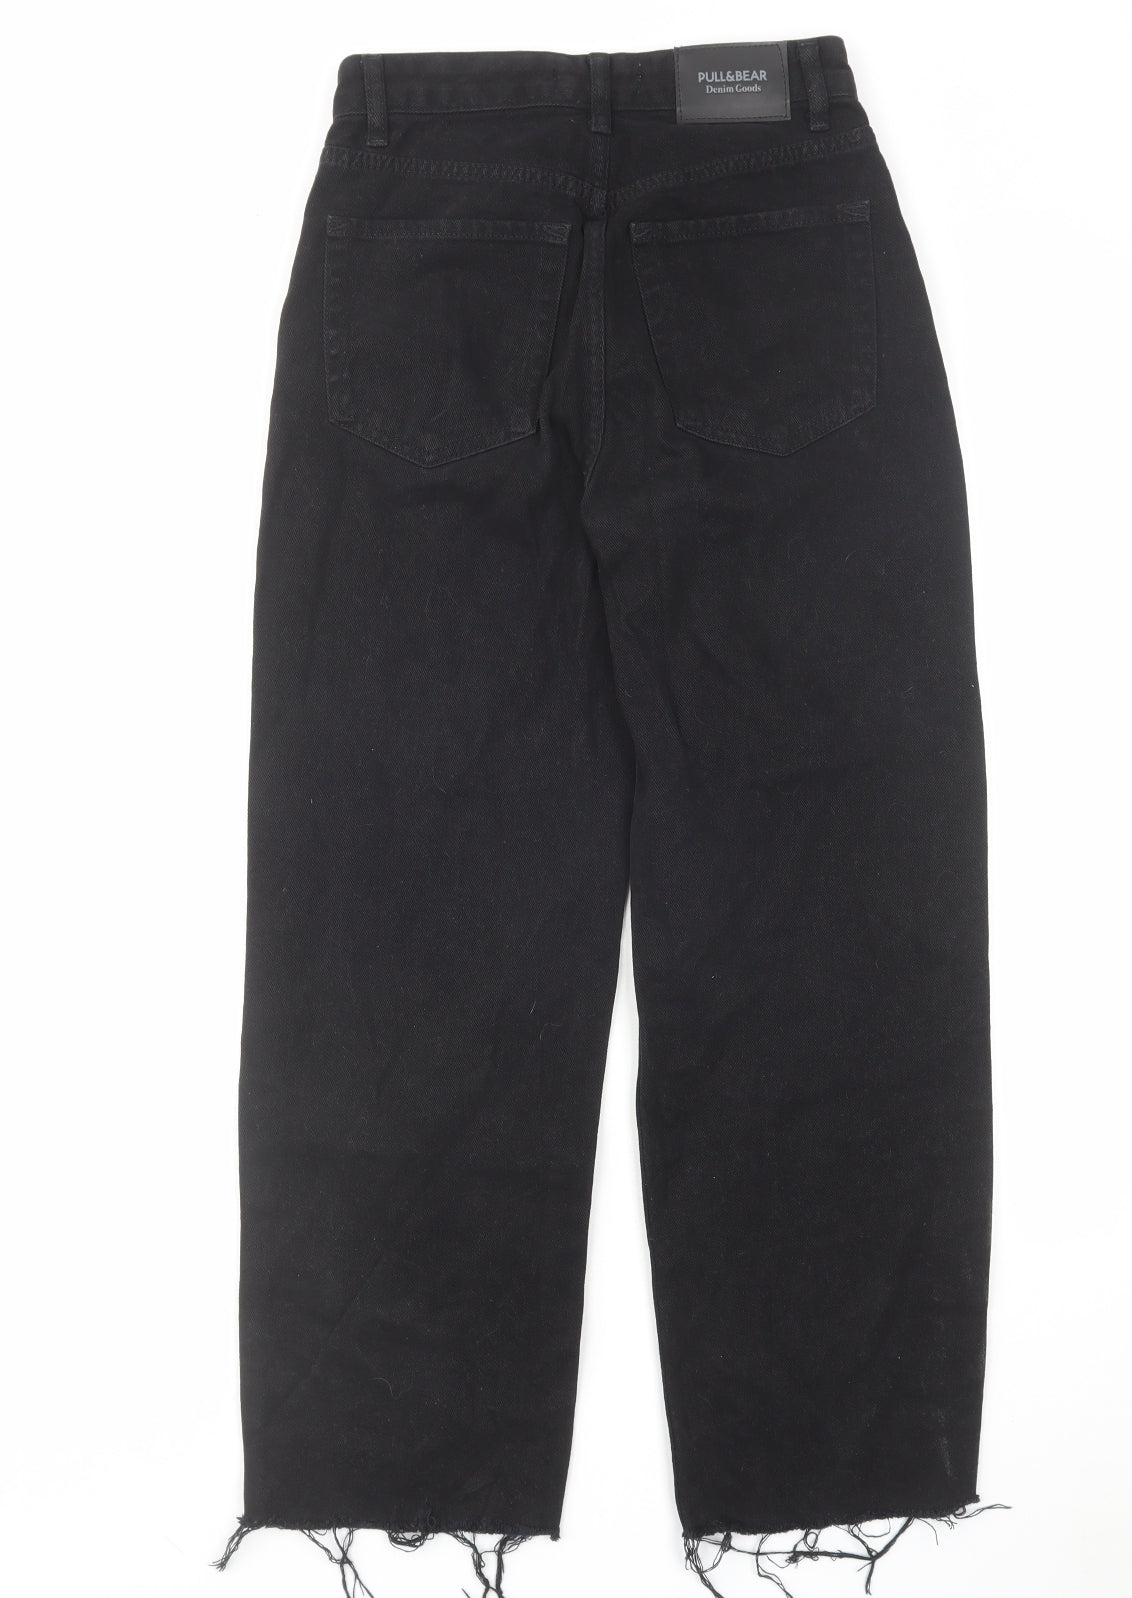 Pull&Bear Womens Black Cotton Wide-Leg Jeans Size 4 L25 in Regular Zip - Frayed Hem